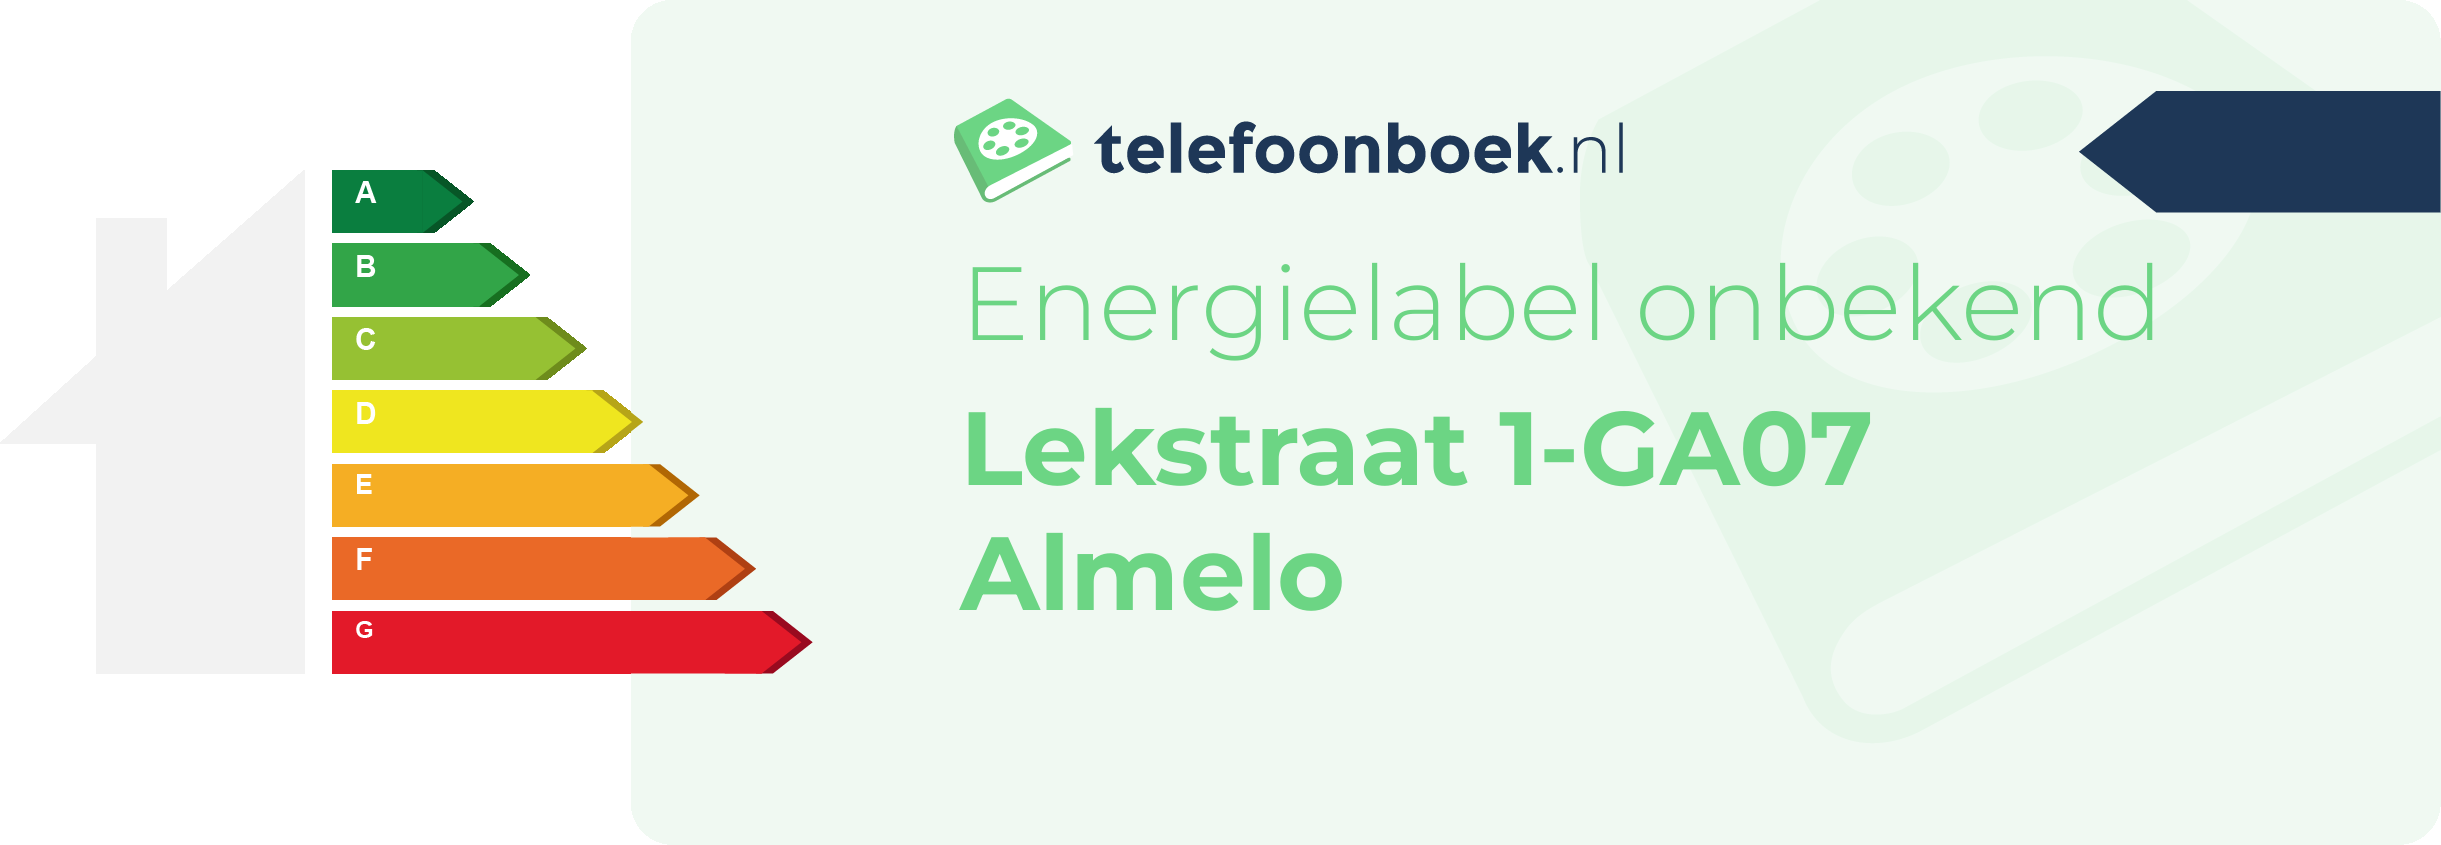 Energielabel Lekstraat 1-GA07 Almelo